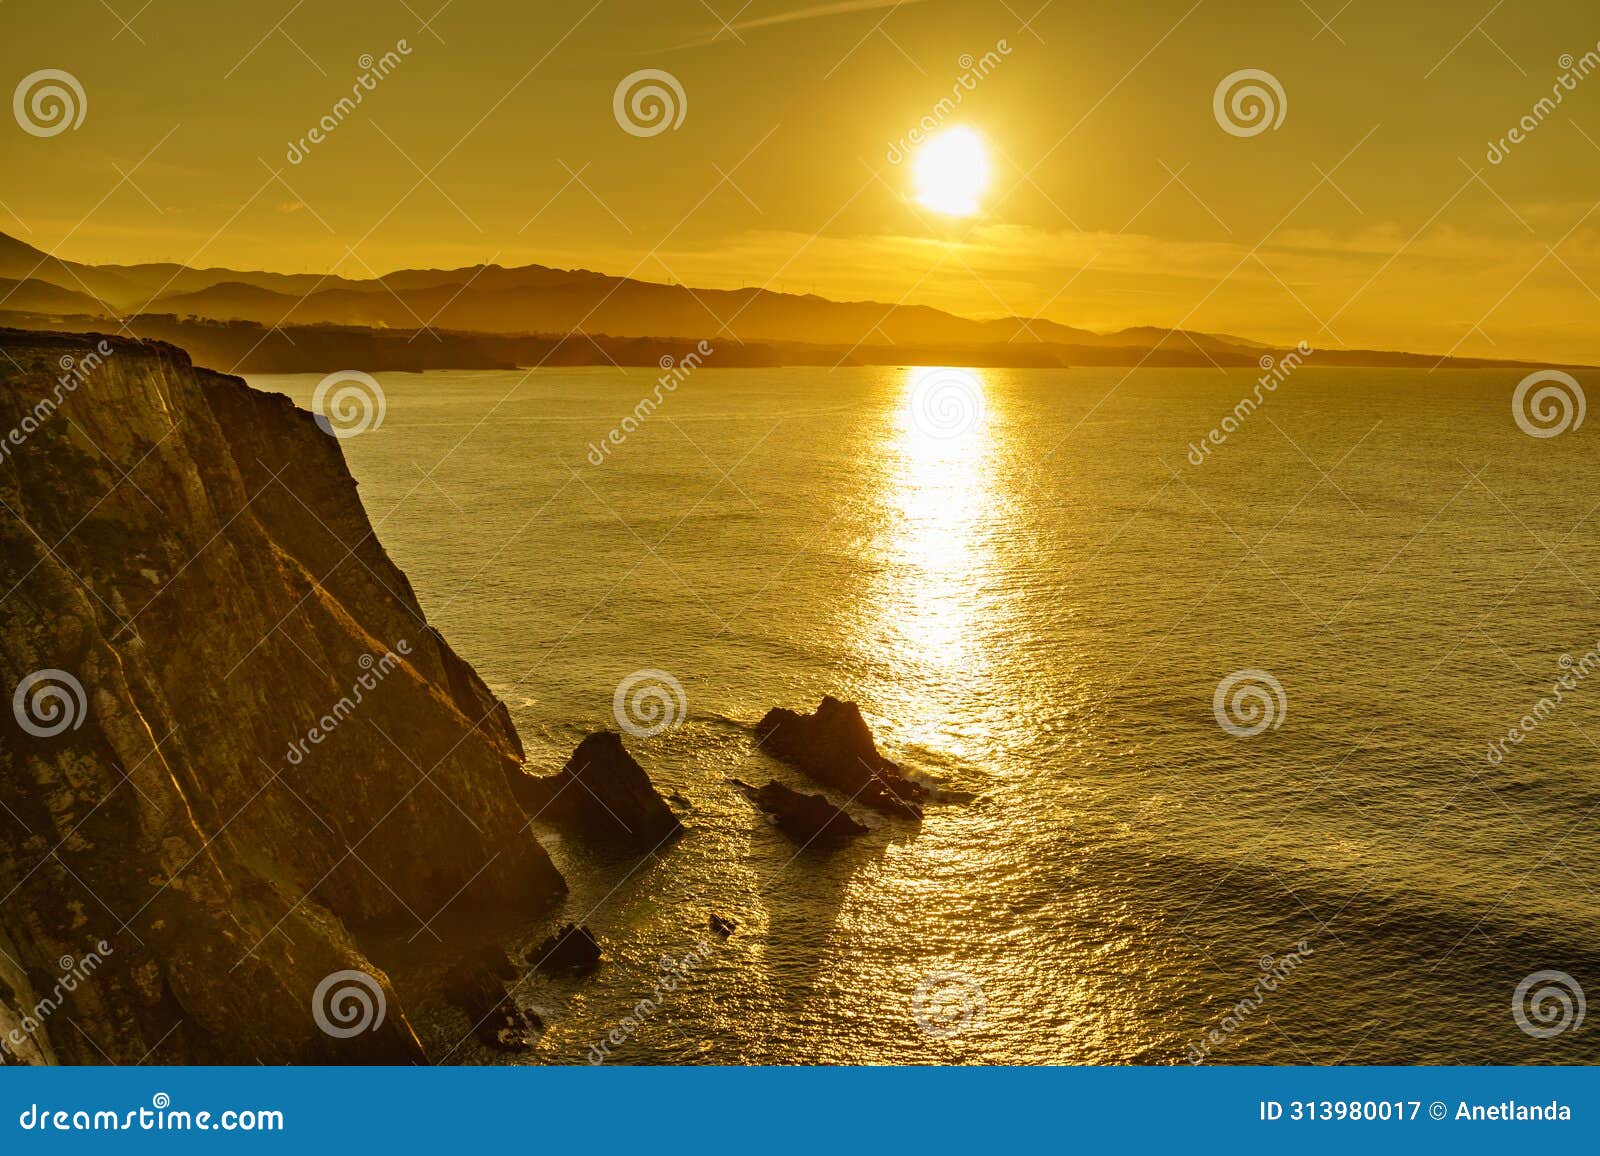 asturias coast. sunset over cabo busto cliffs, spain